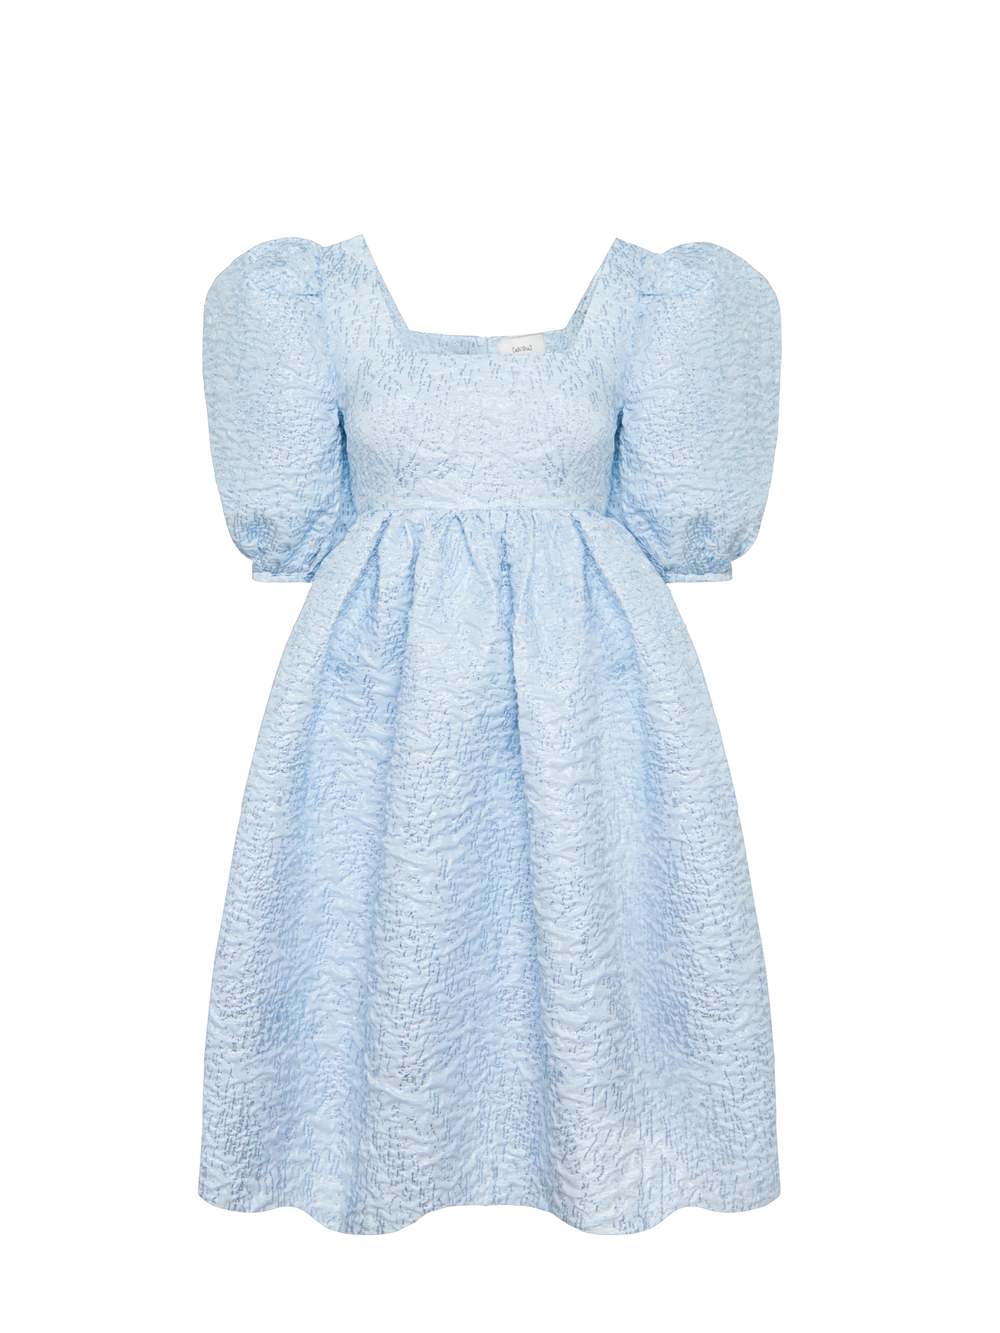 Baby blue dress